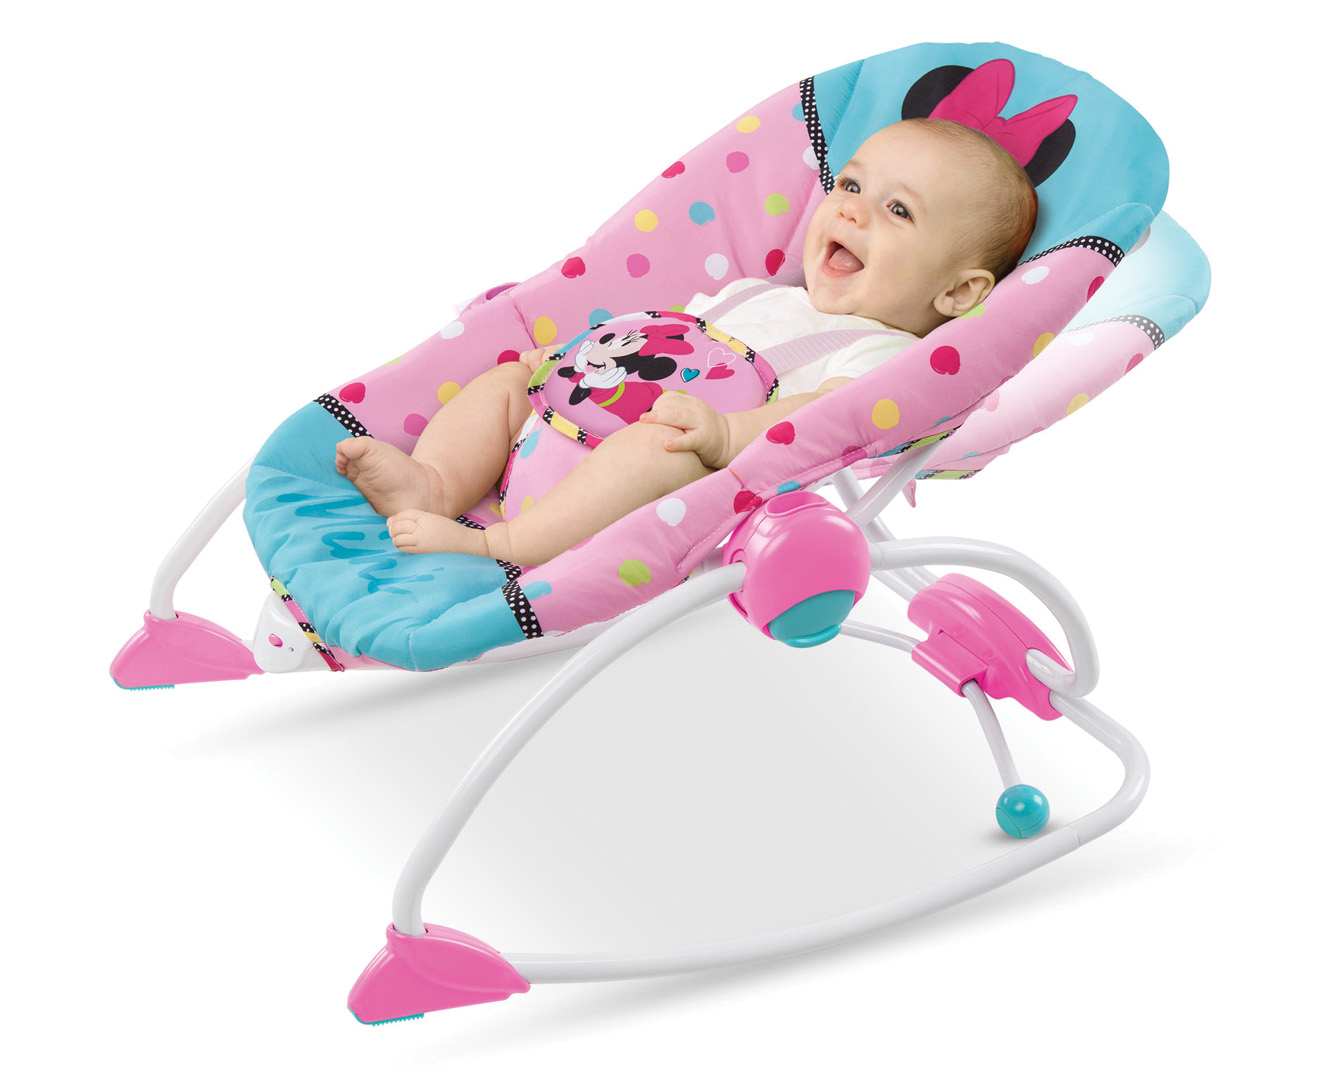 Minnie Mouse Peek-A-Boo Infant To Toddler Rocker | Mumgo.com.au